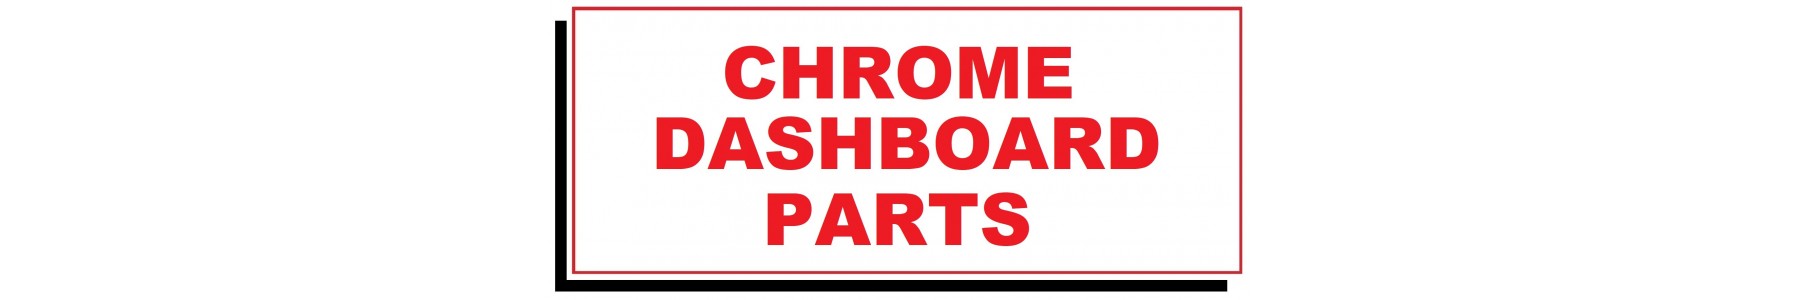 CHROME DASHBOARD PARTS